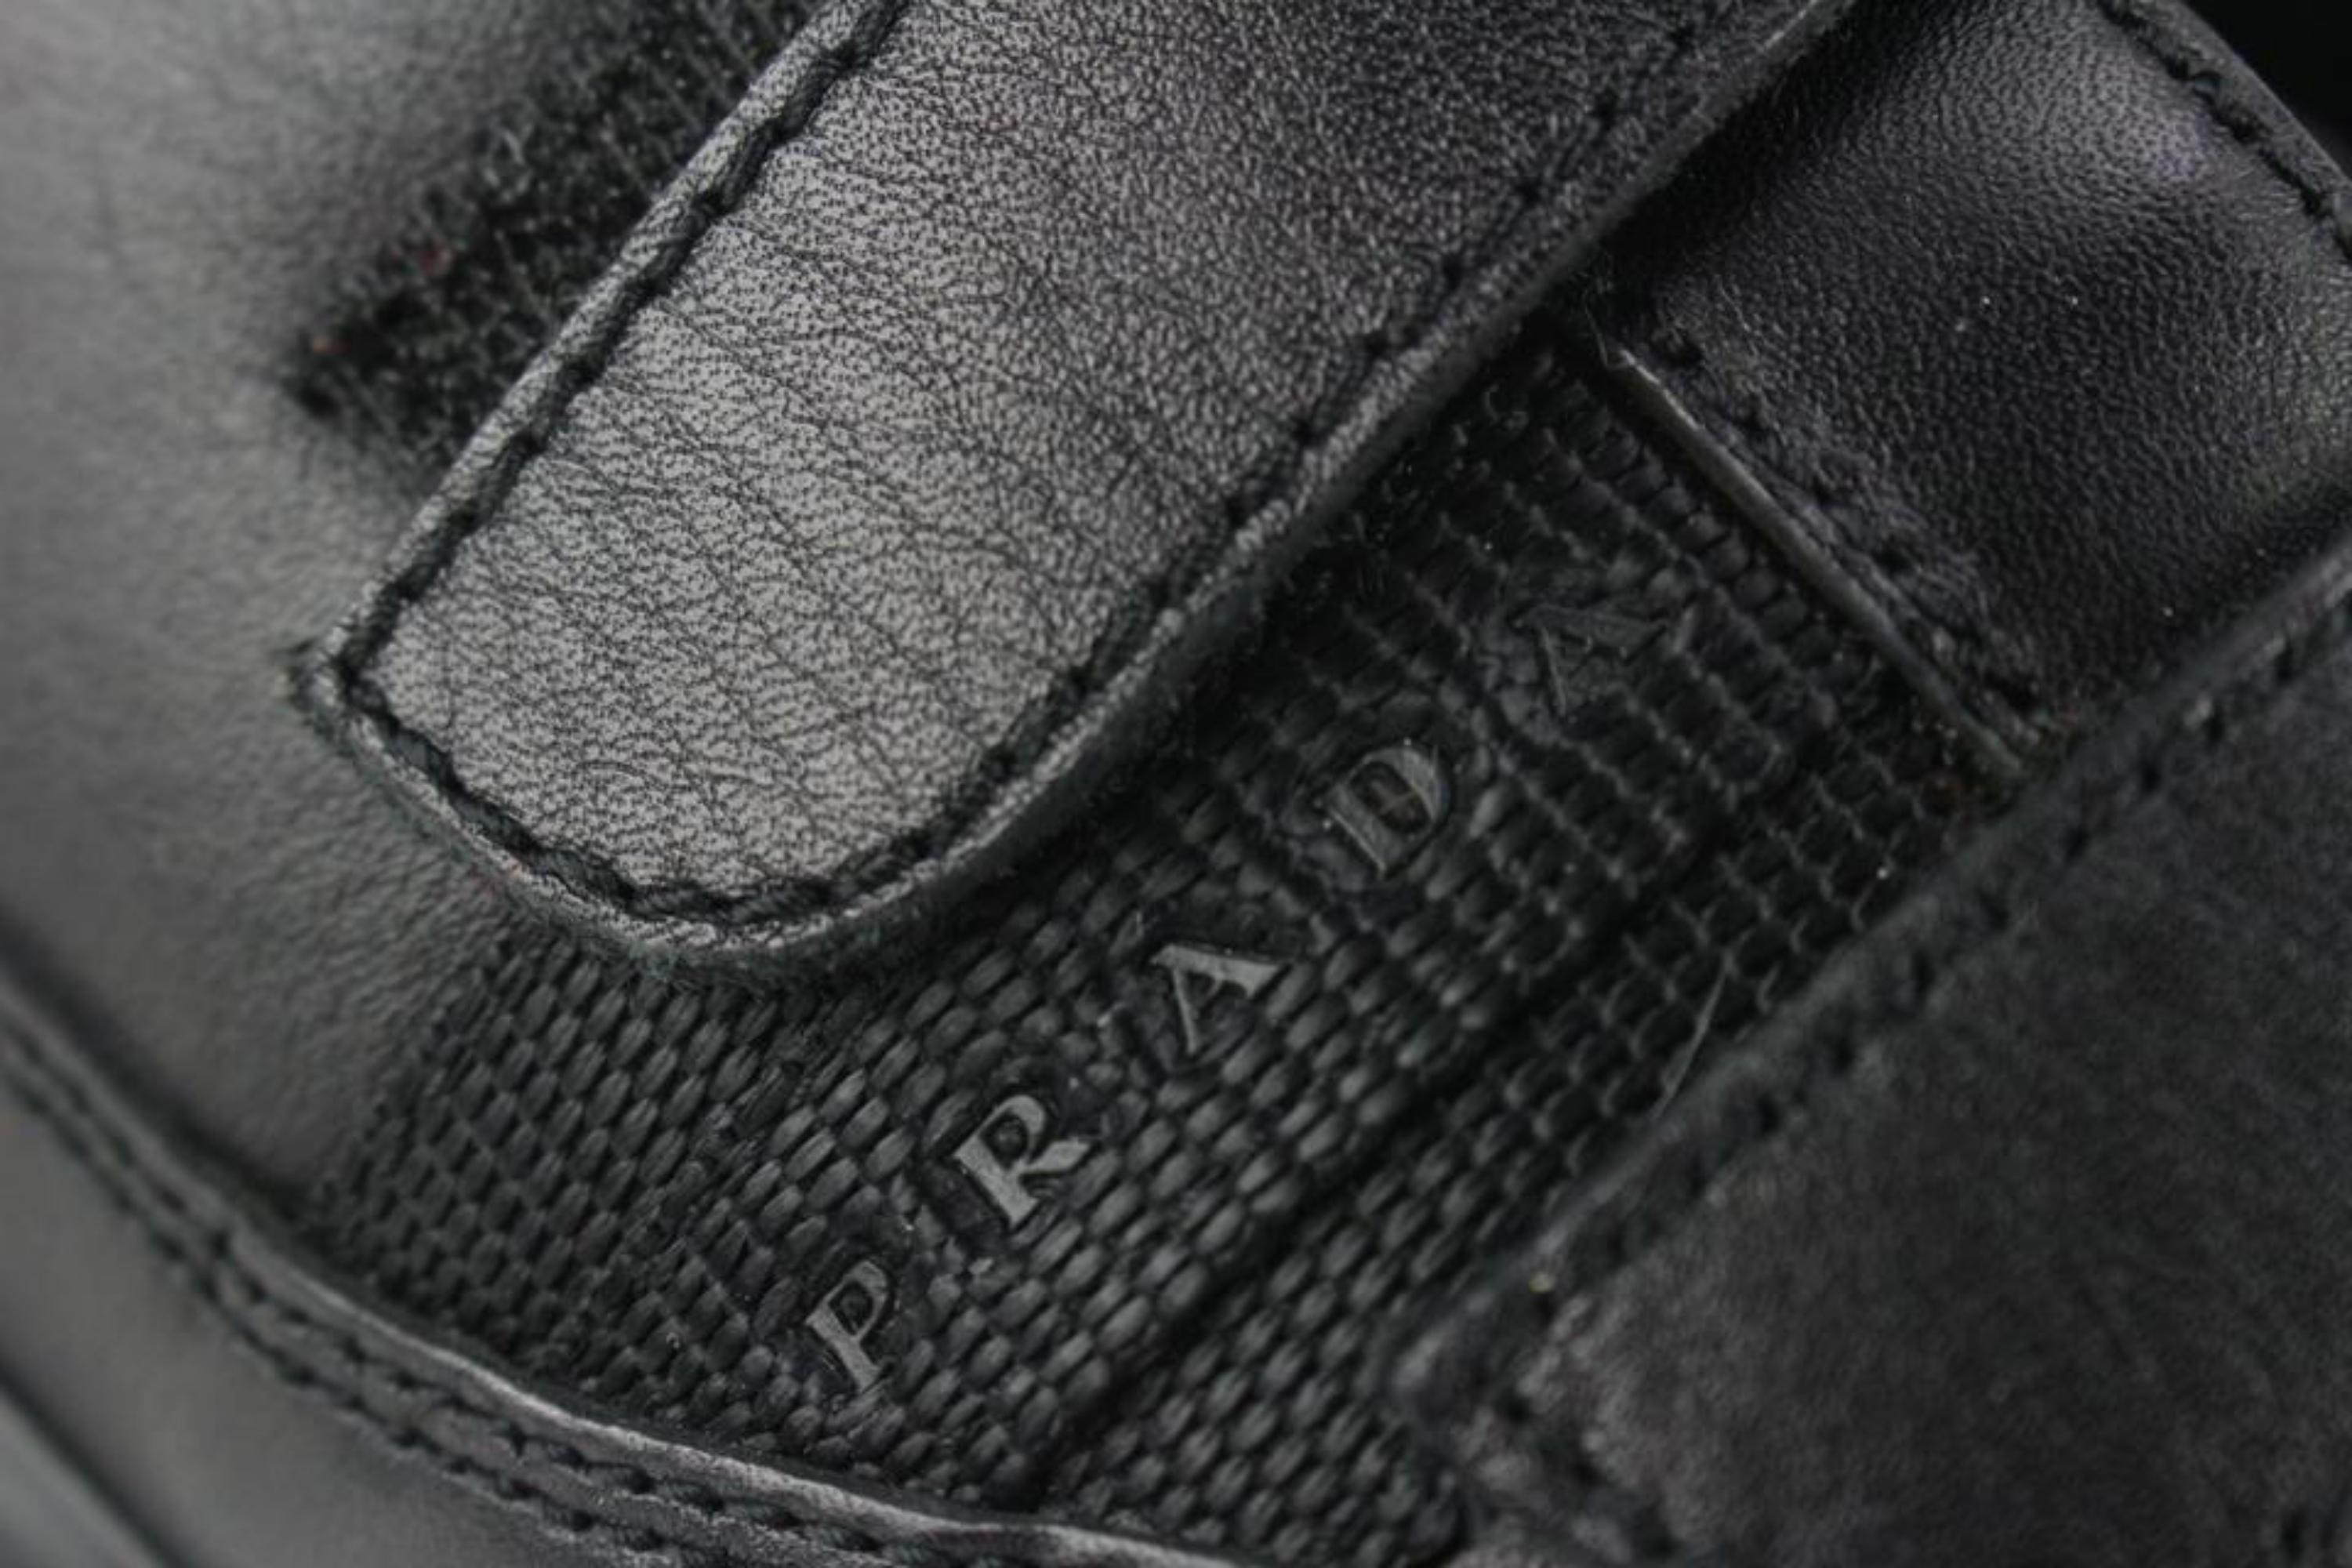 Prada Women's 7.5 US Black Velcro Low Top Sneaker 128p33 For Sale 5